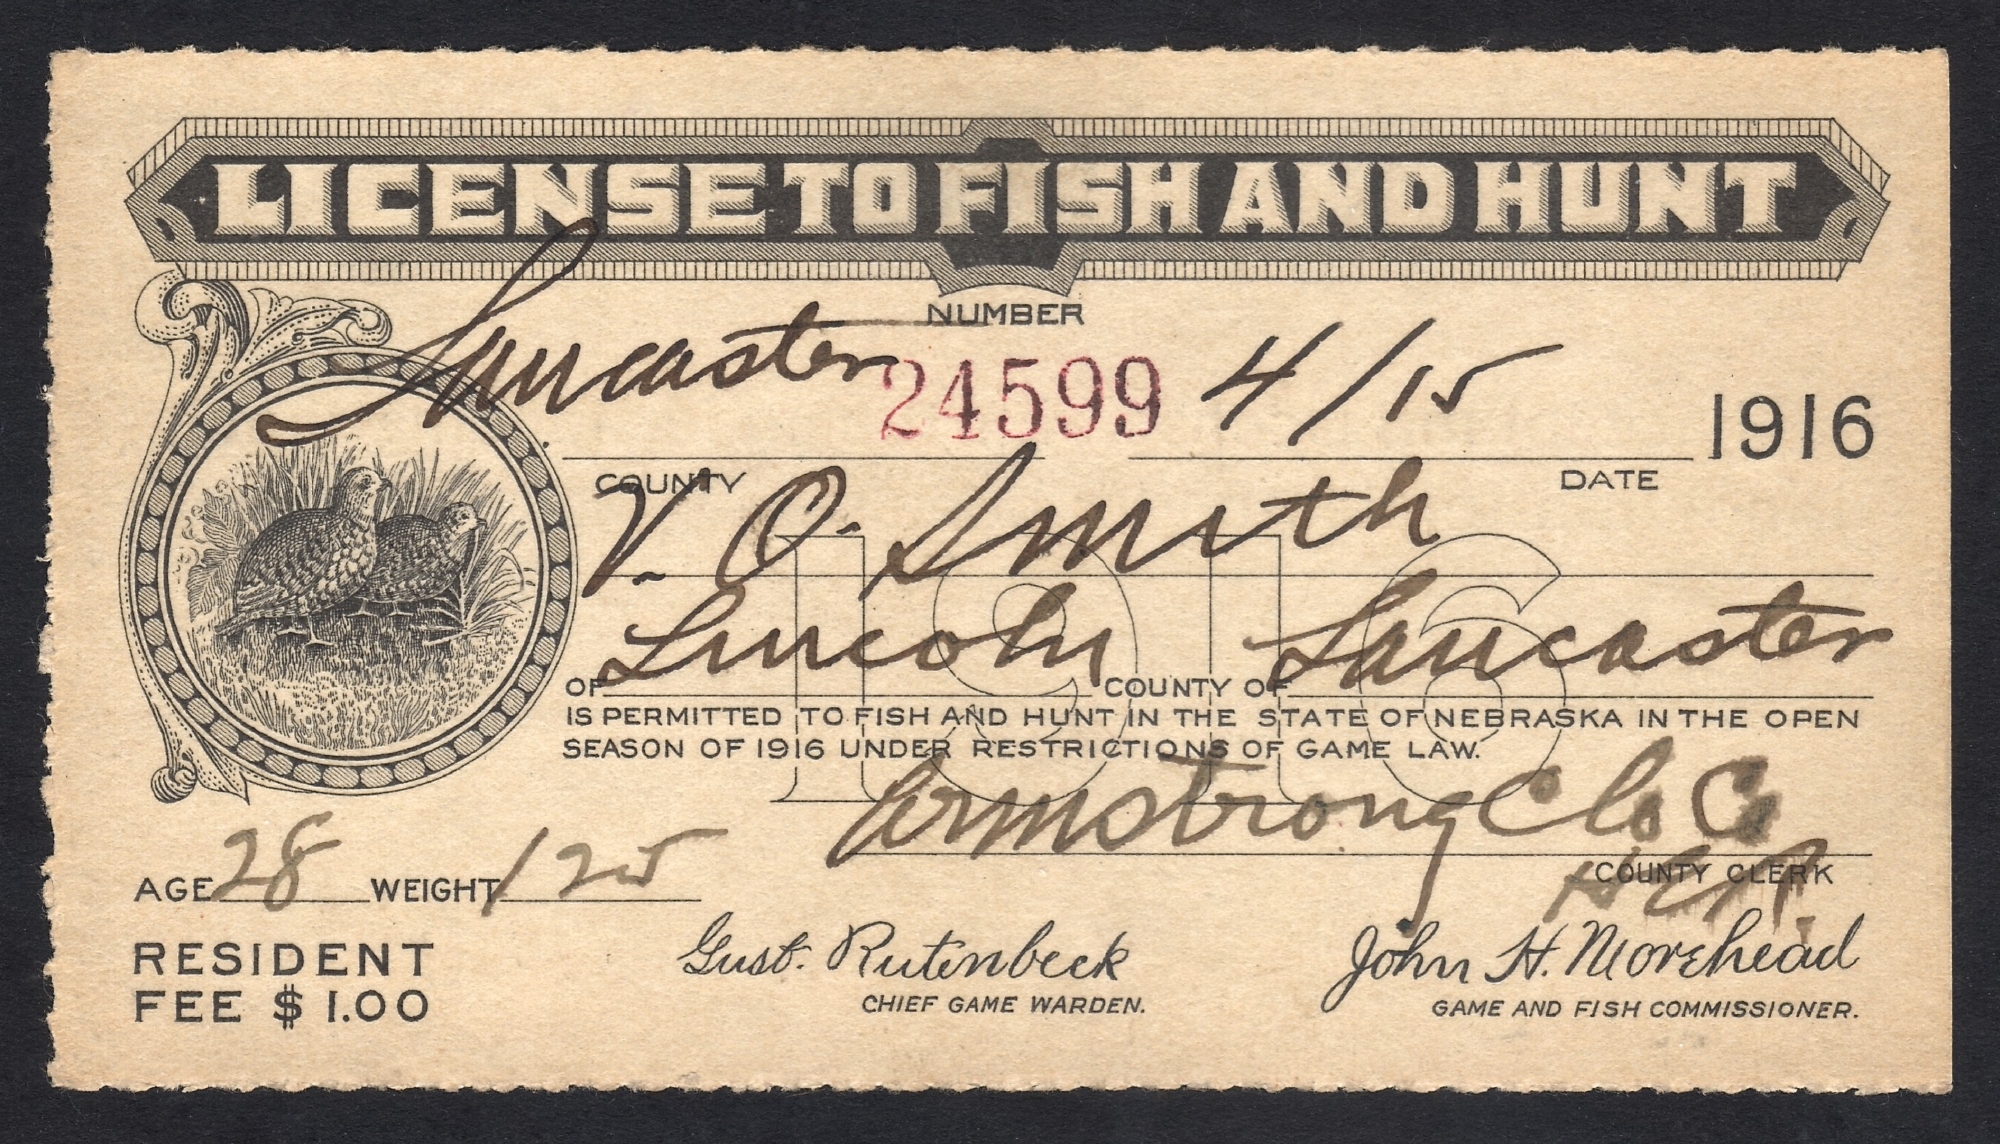 Nebraska 1916 License to Fish and Hunt